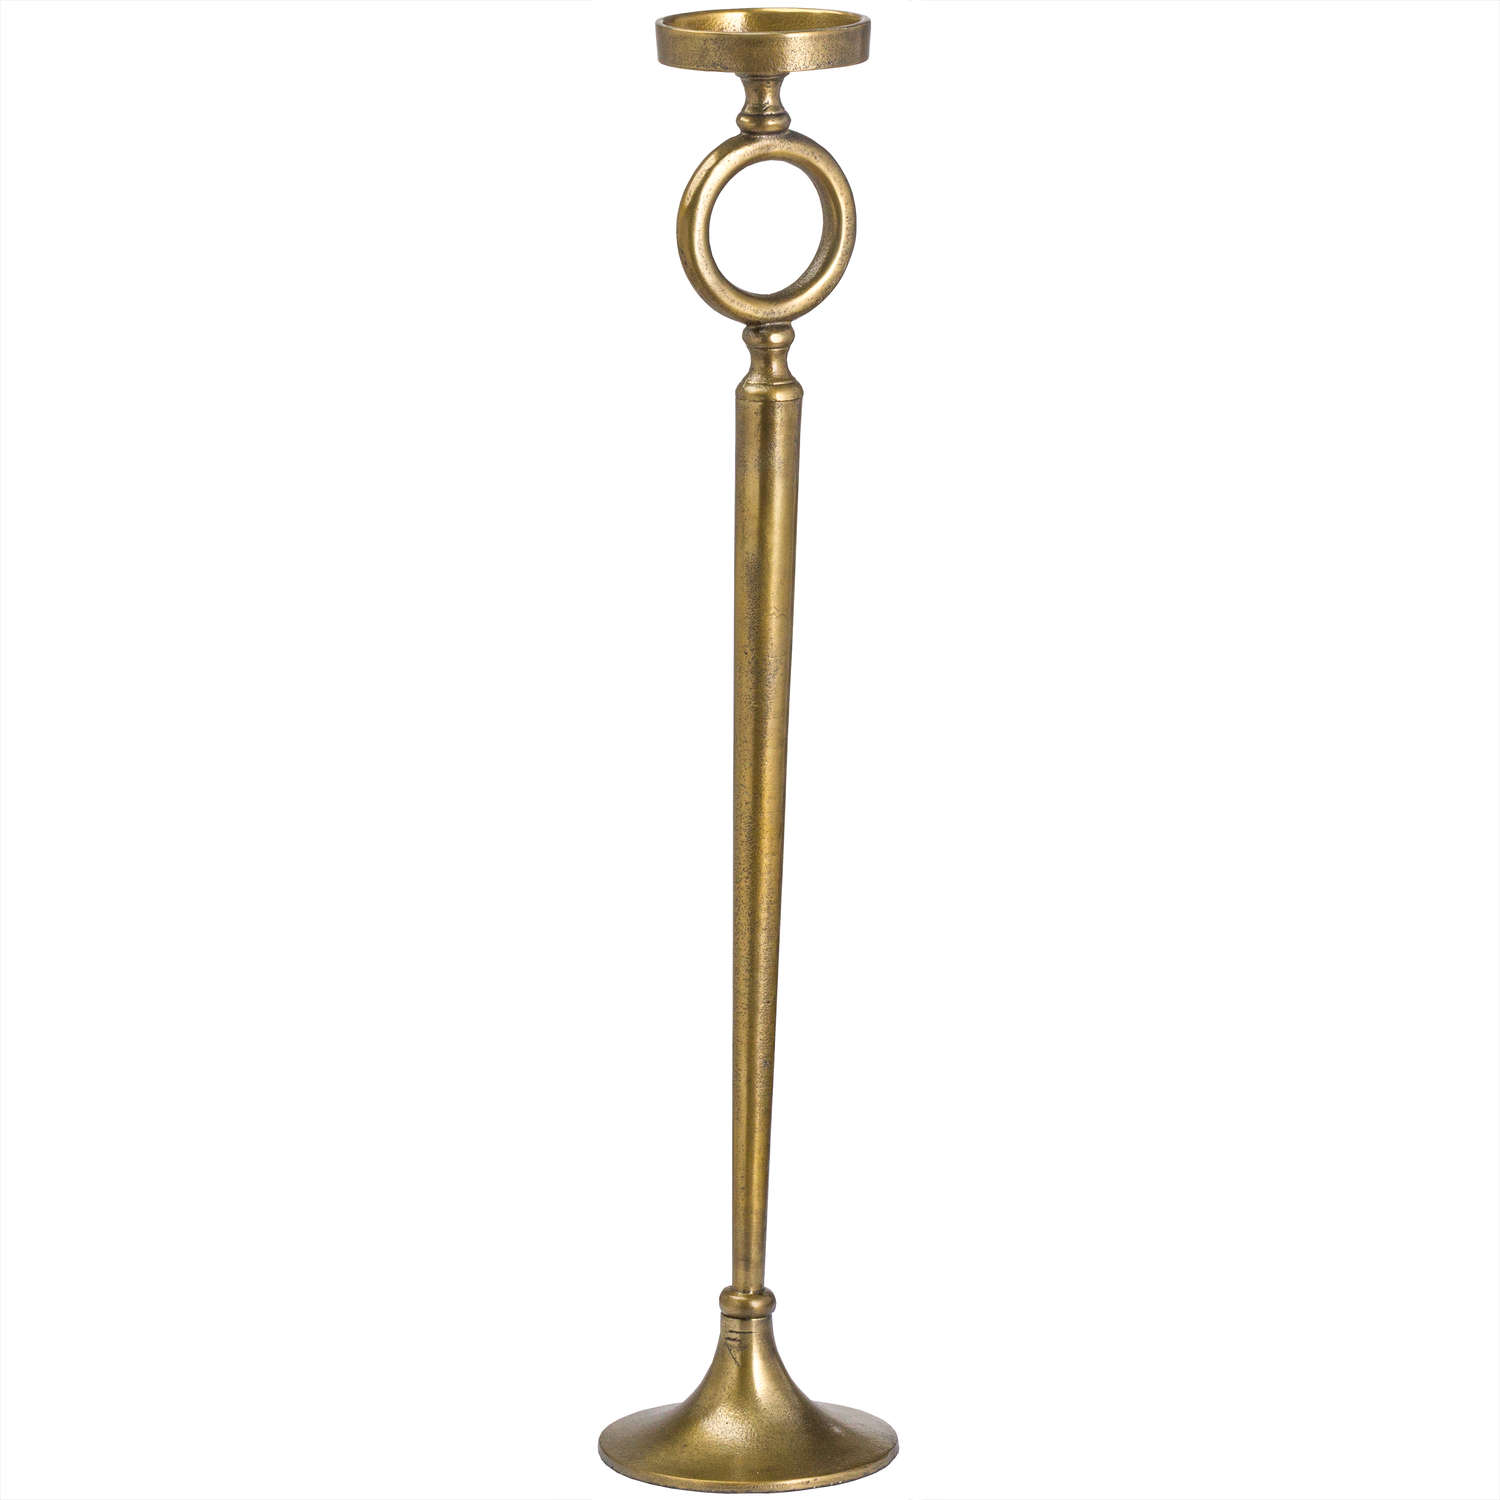 Ohlson Antique Brass Cast Large Décor Candle Stand